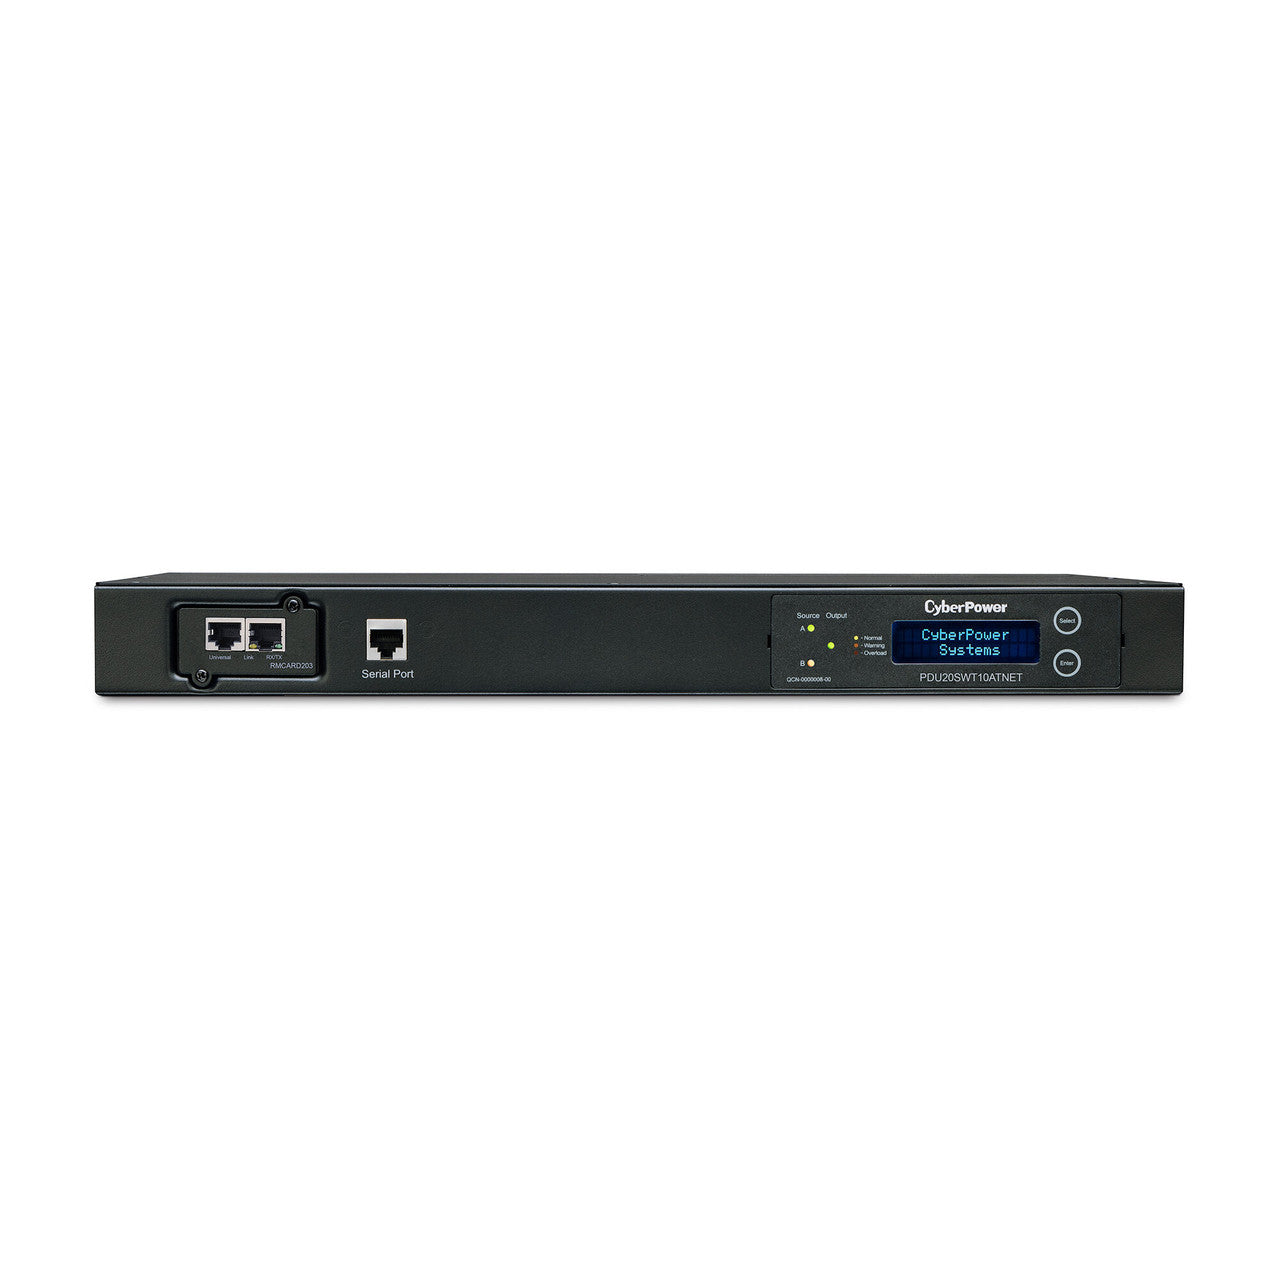 CyberPower PDU20SWT10ATNET 20A (Derated to 16A), 100 V - 120 V, 50/60Hz, 2x NEMA L5-20P plugs